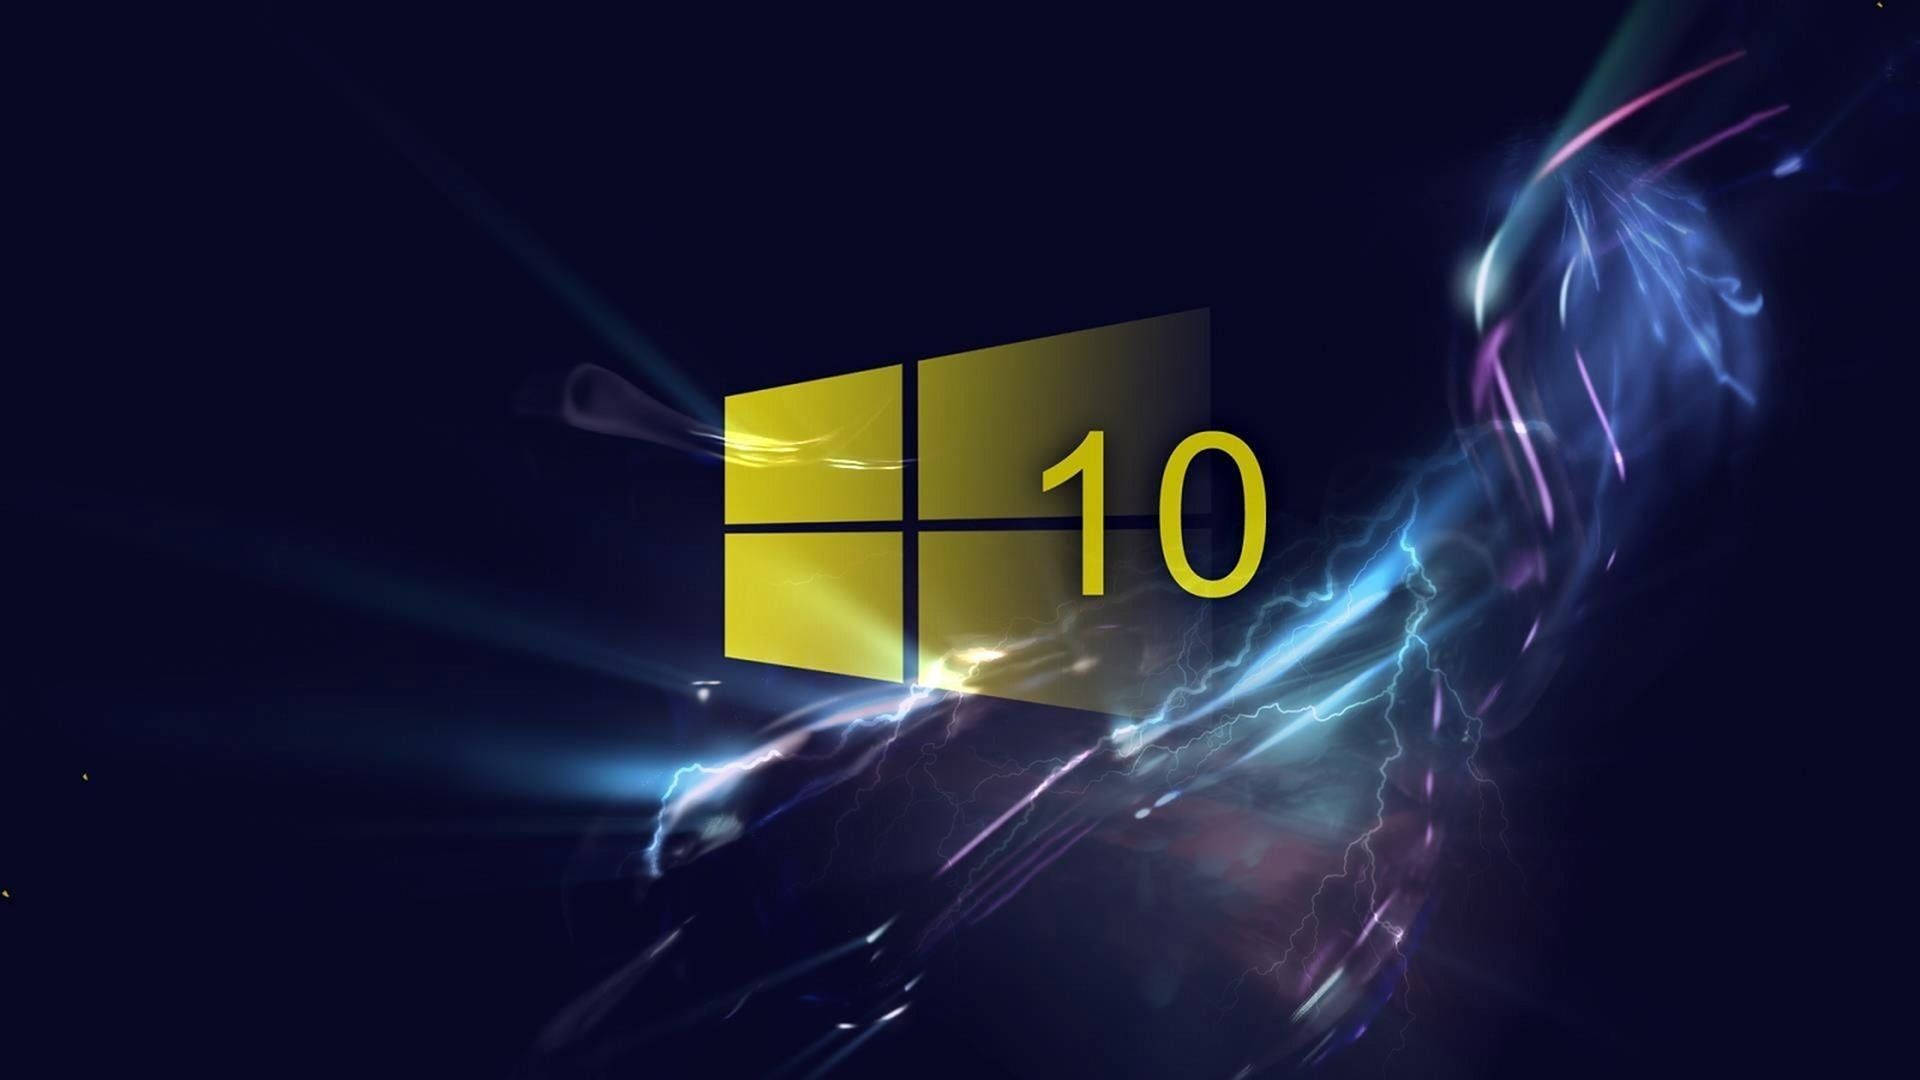 Windows 10 Hd Yellow Logo Background